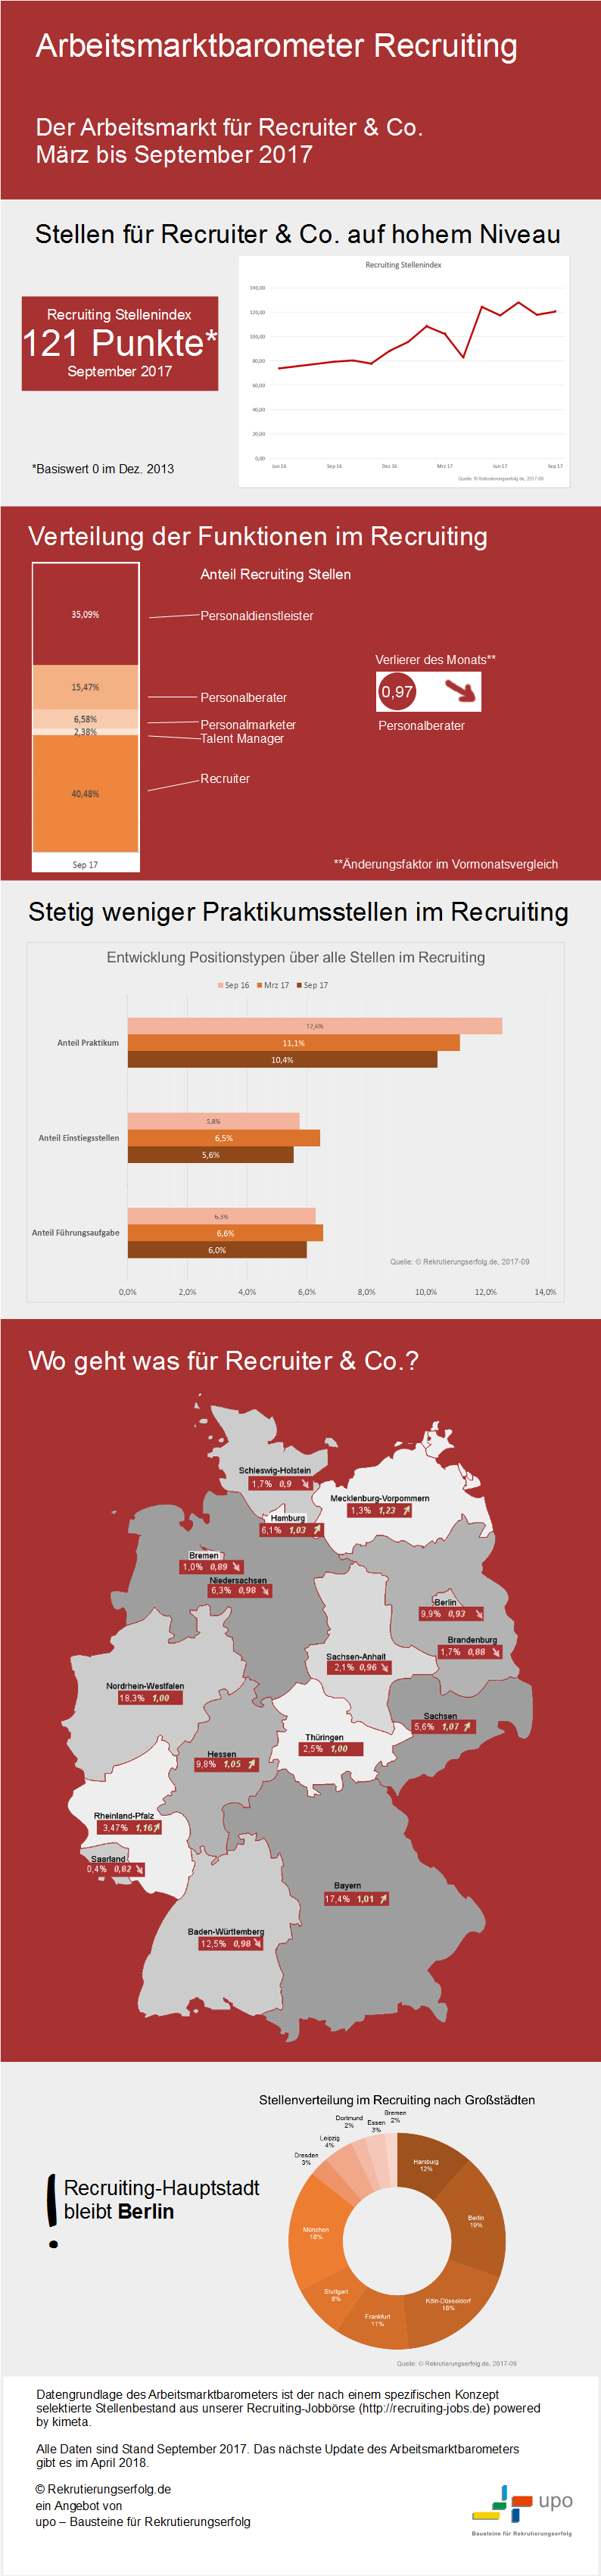 Infografik Arbeitsmarktbarometer Recruiting